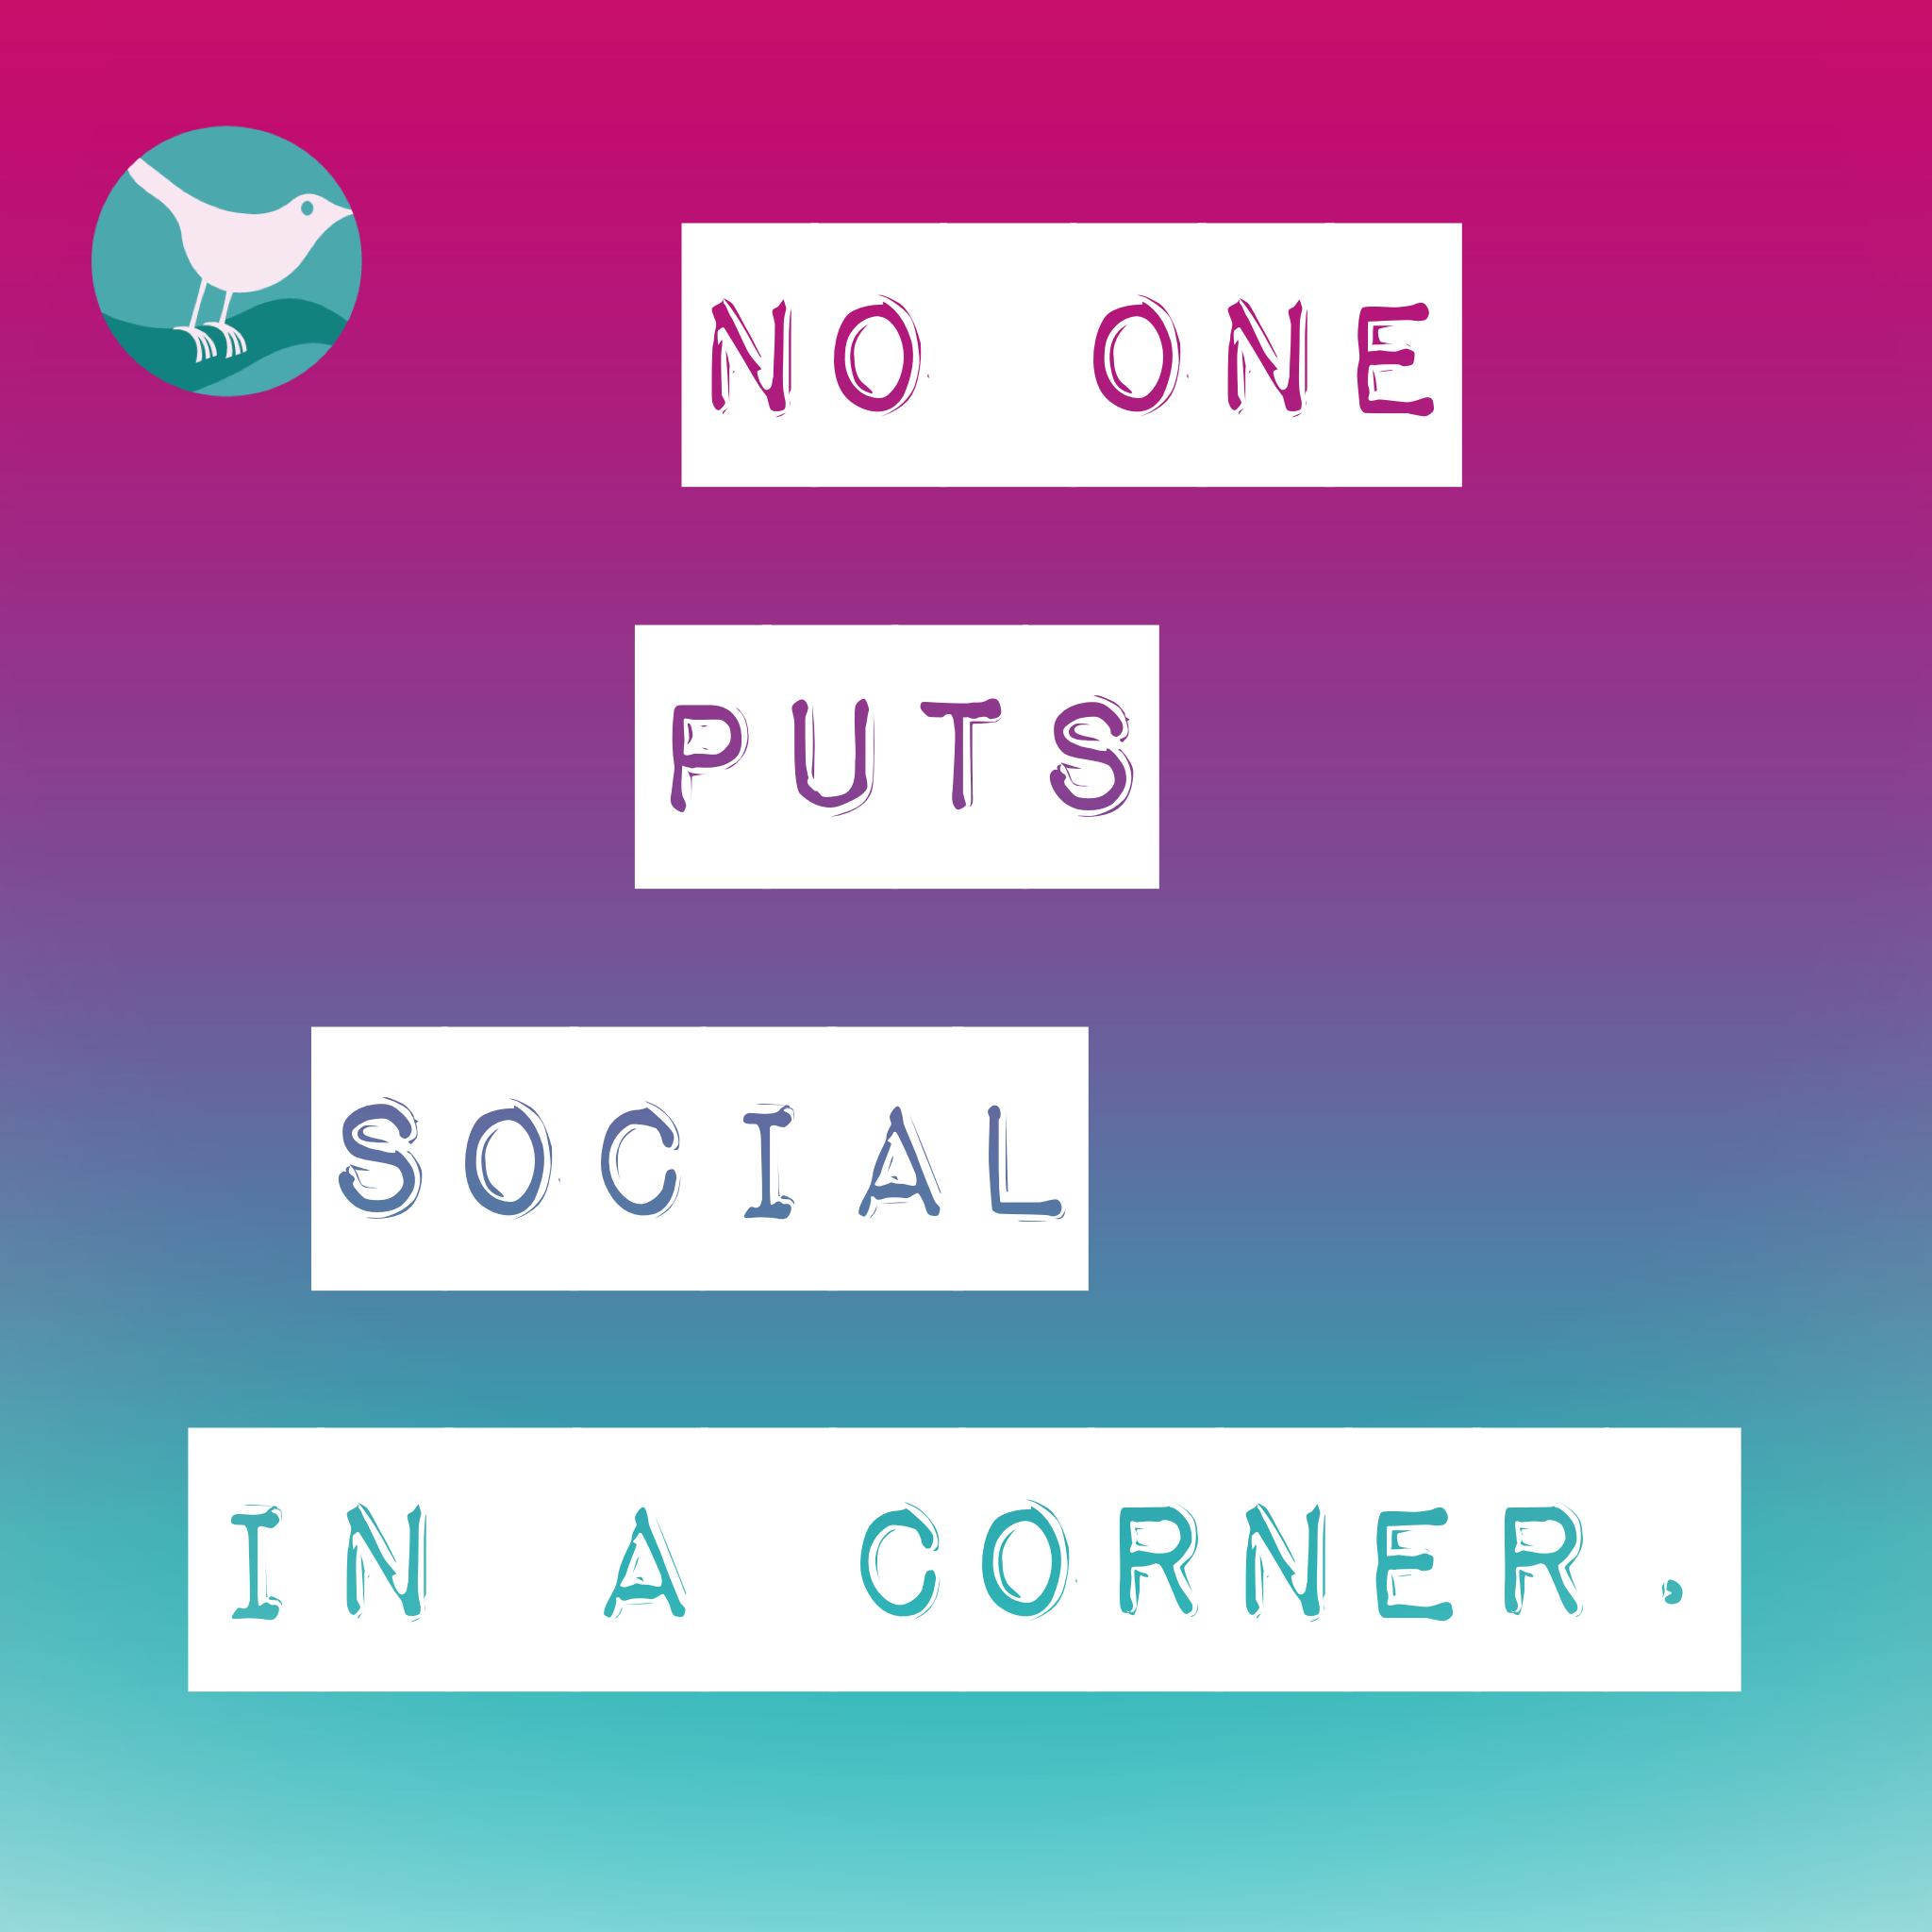 No one puts Social PR in a corner